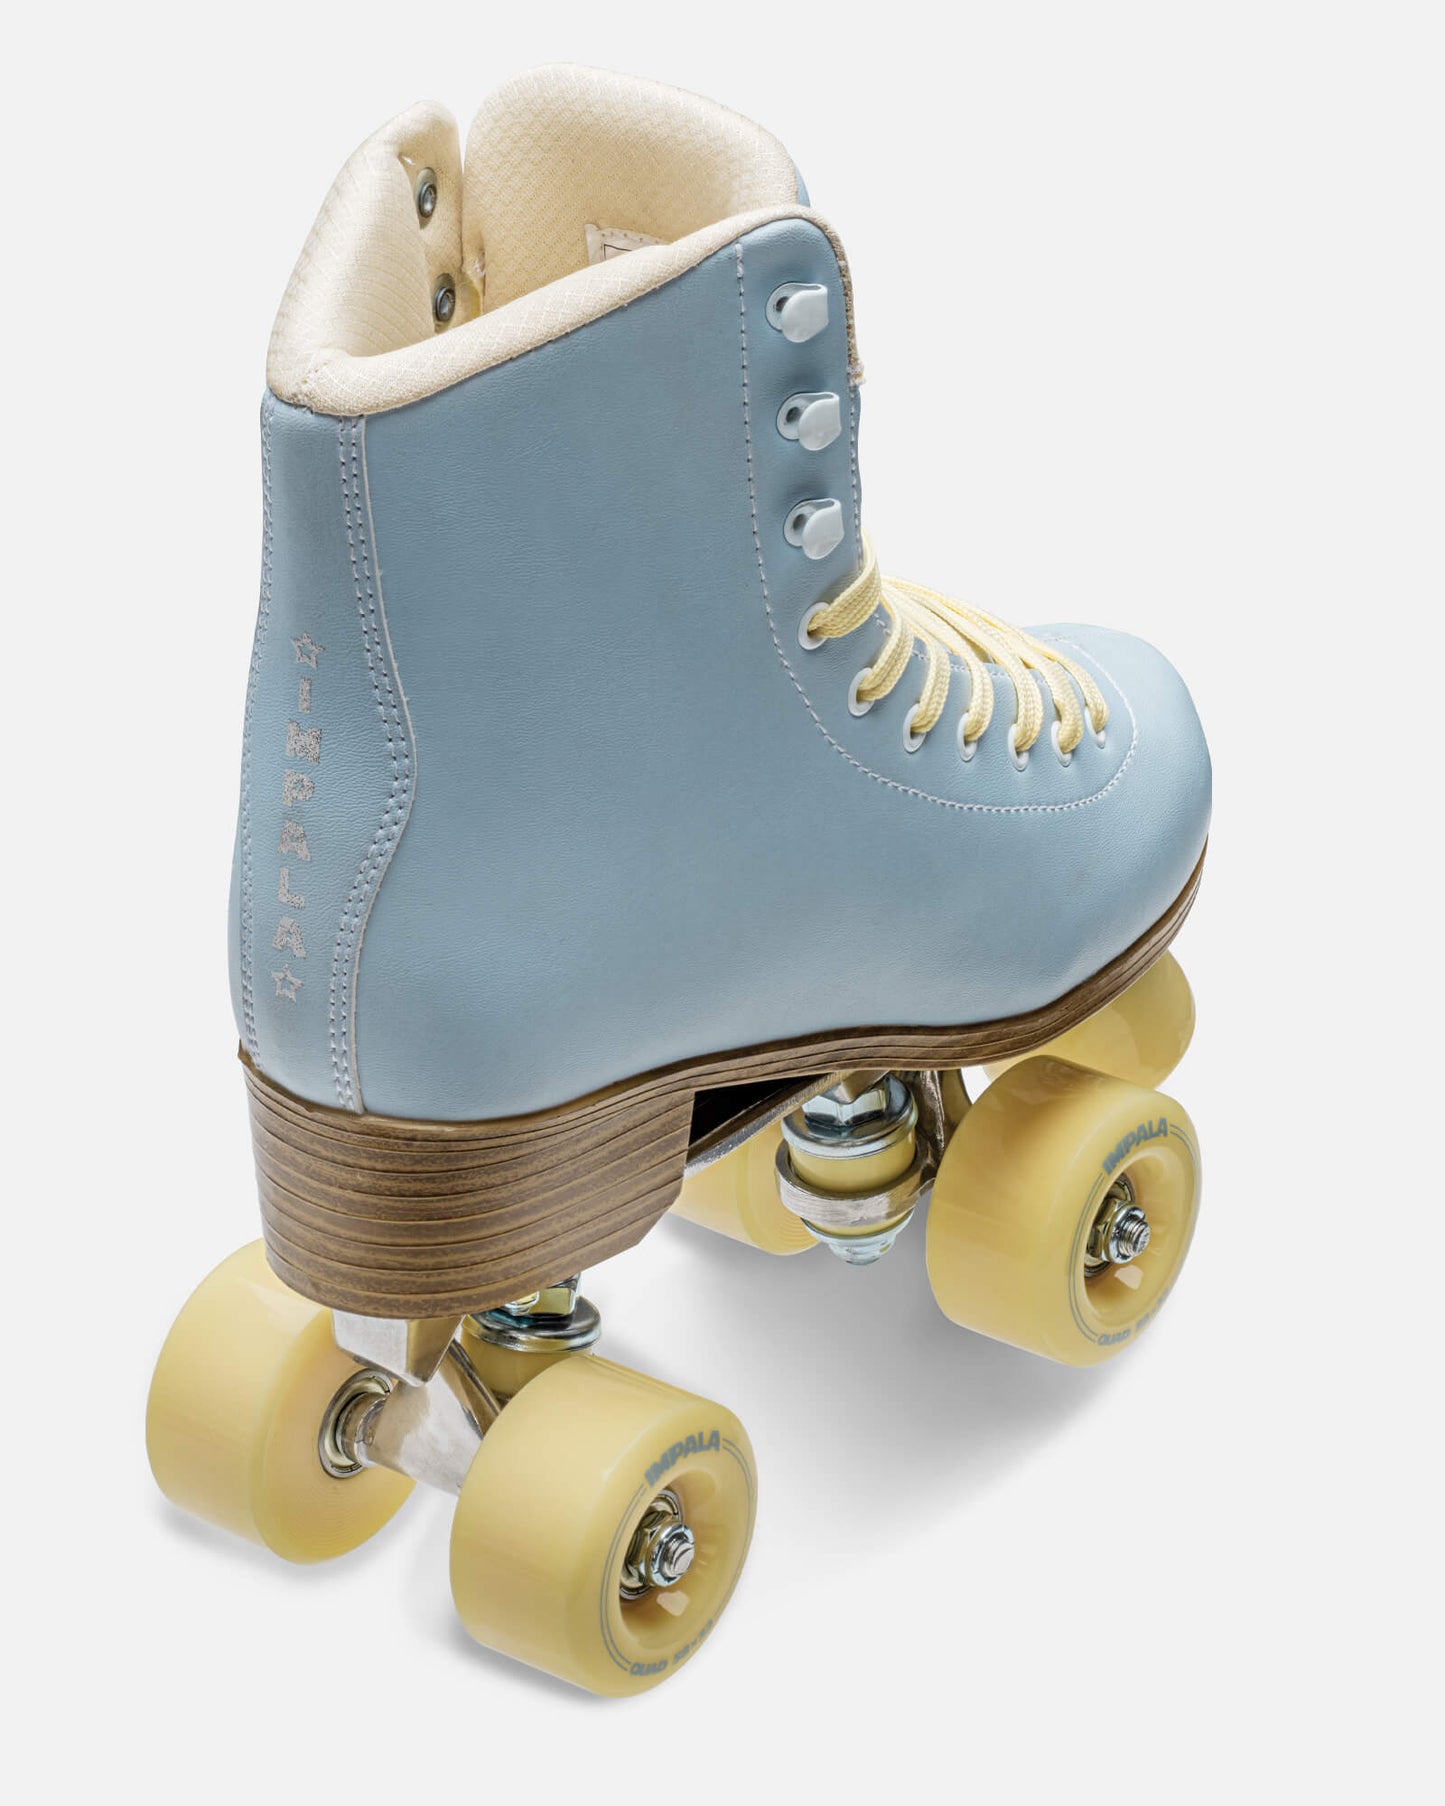 Impala Roller Skates Impala Roller Skates - Sky Blue in Sky Blue/Yellow